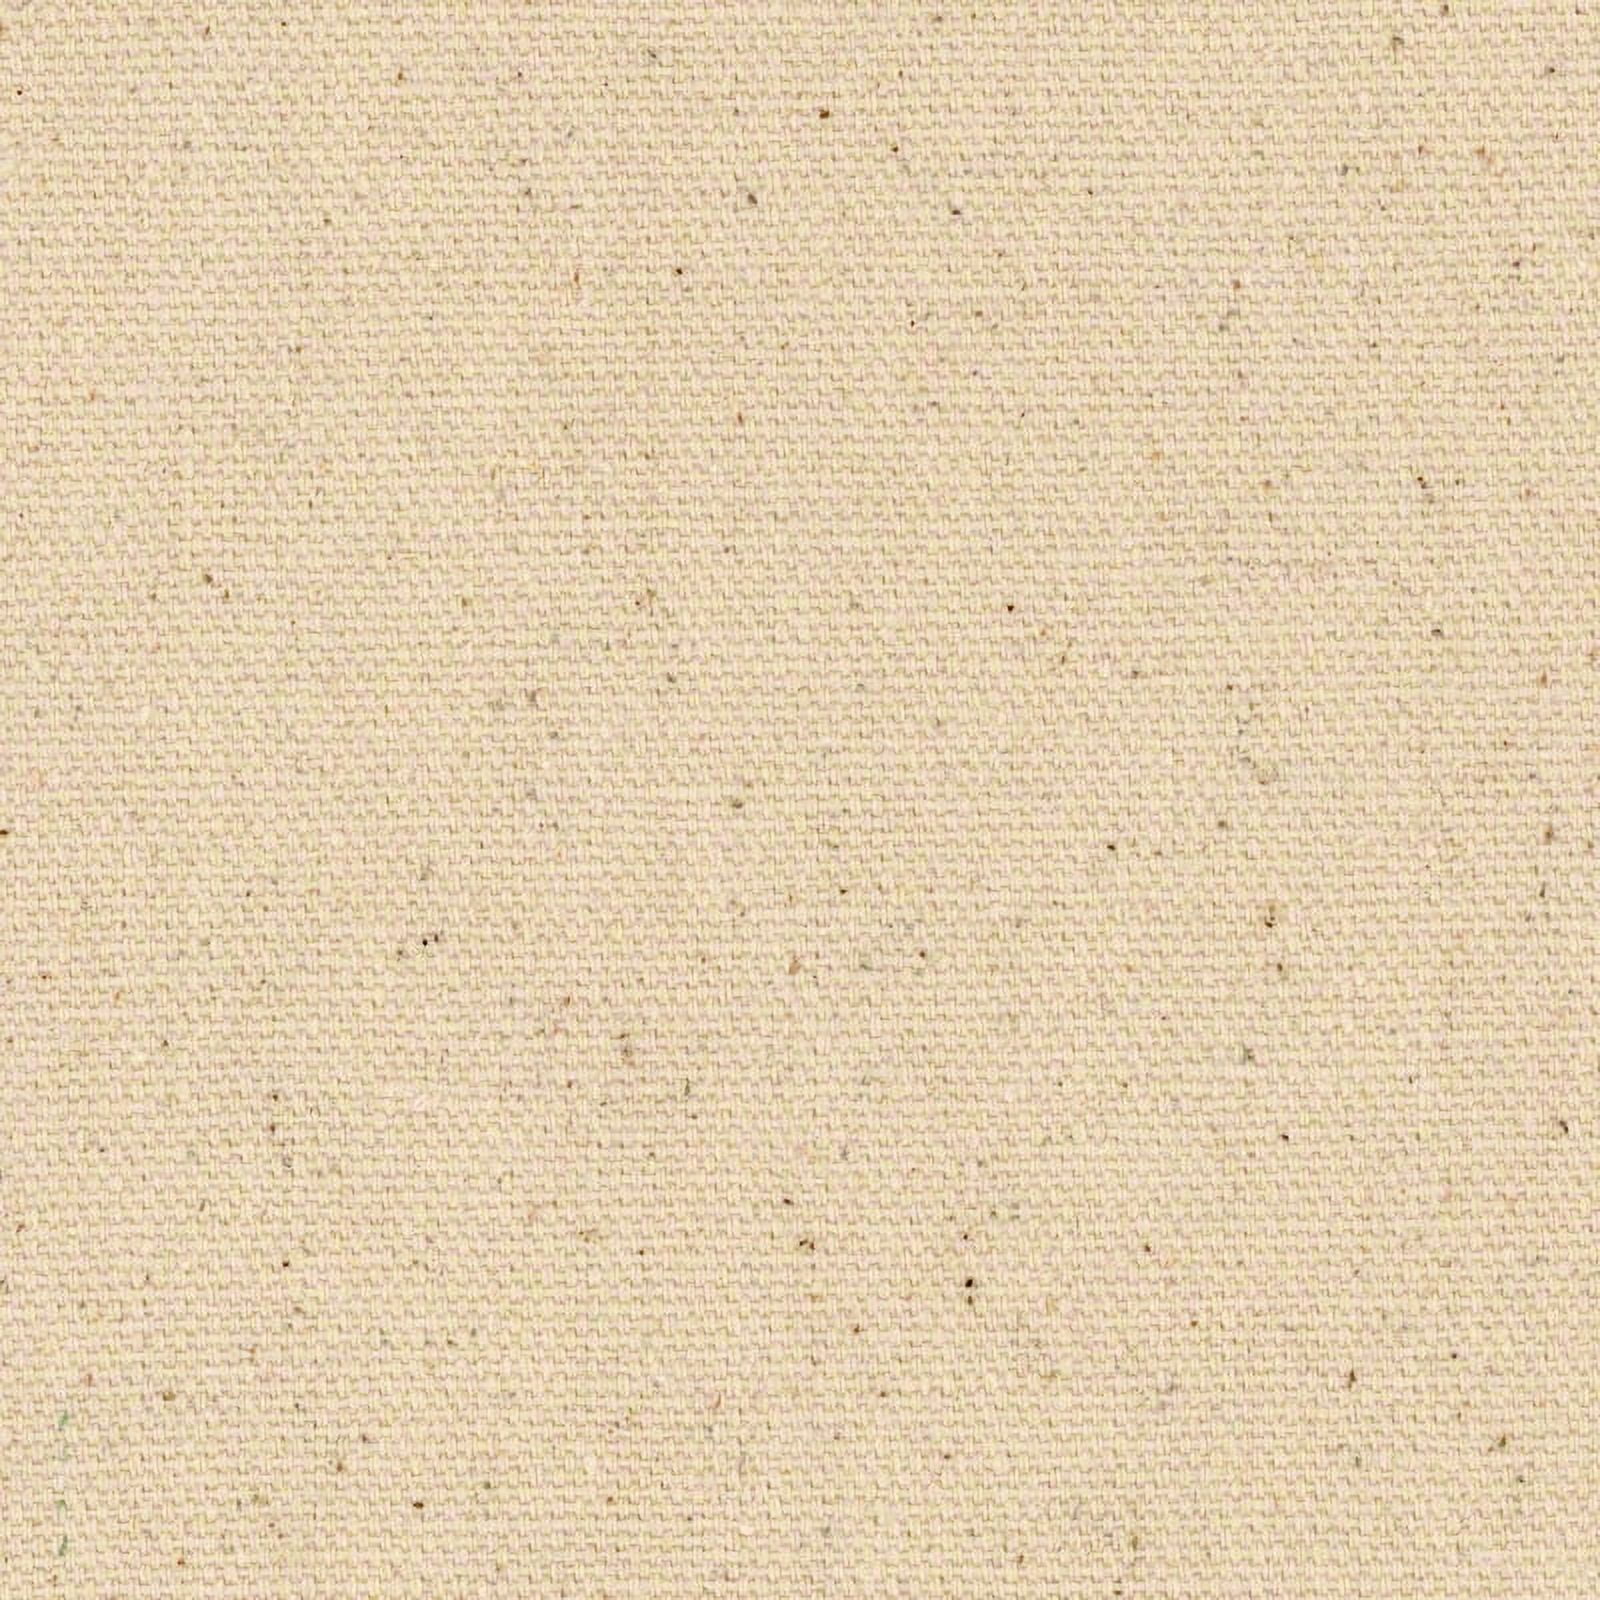 10oz / 60 Cotton Canvas / Duck Cloth - Natural